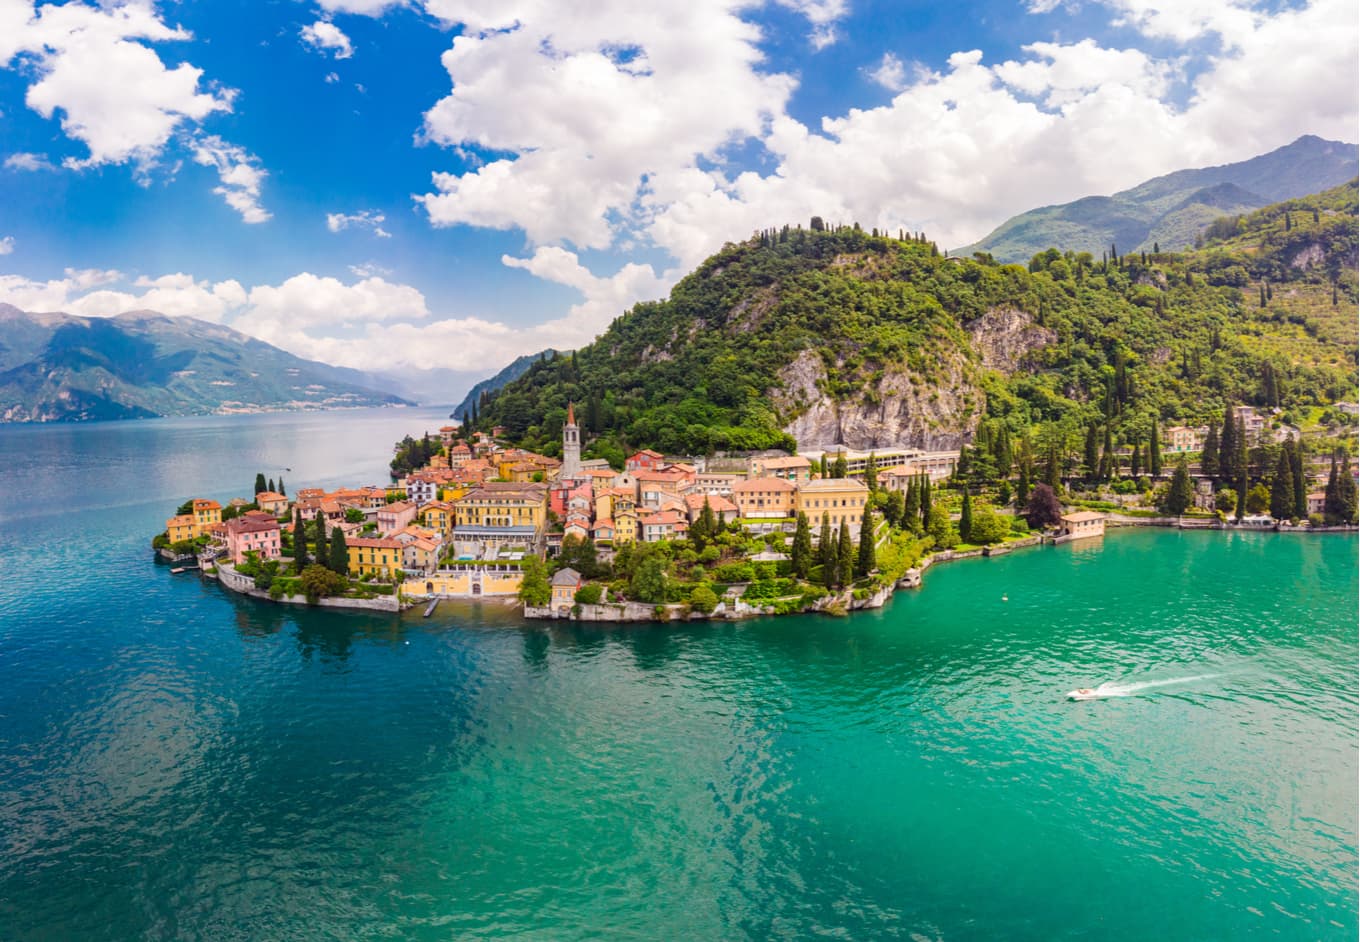 Rent a Boat Lake Como Things to Do in Lake Como